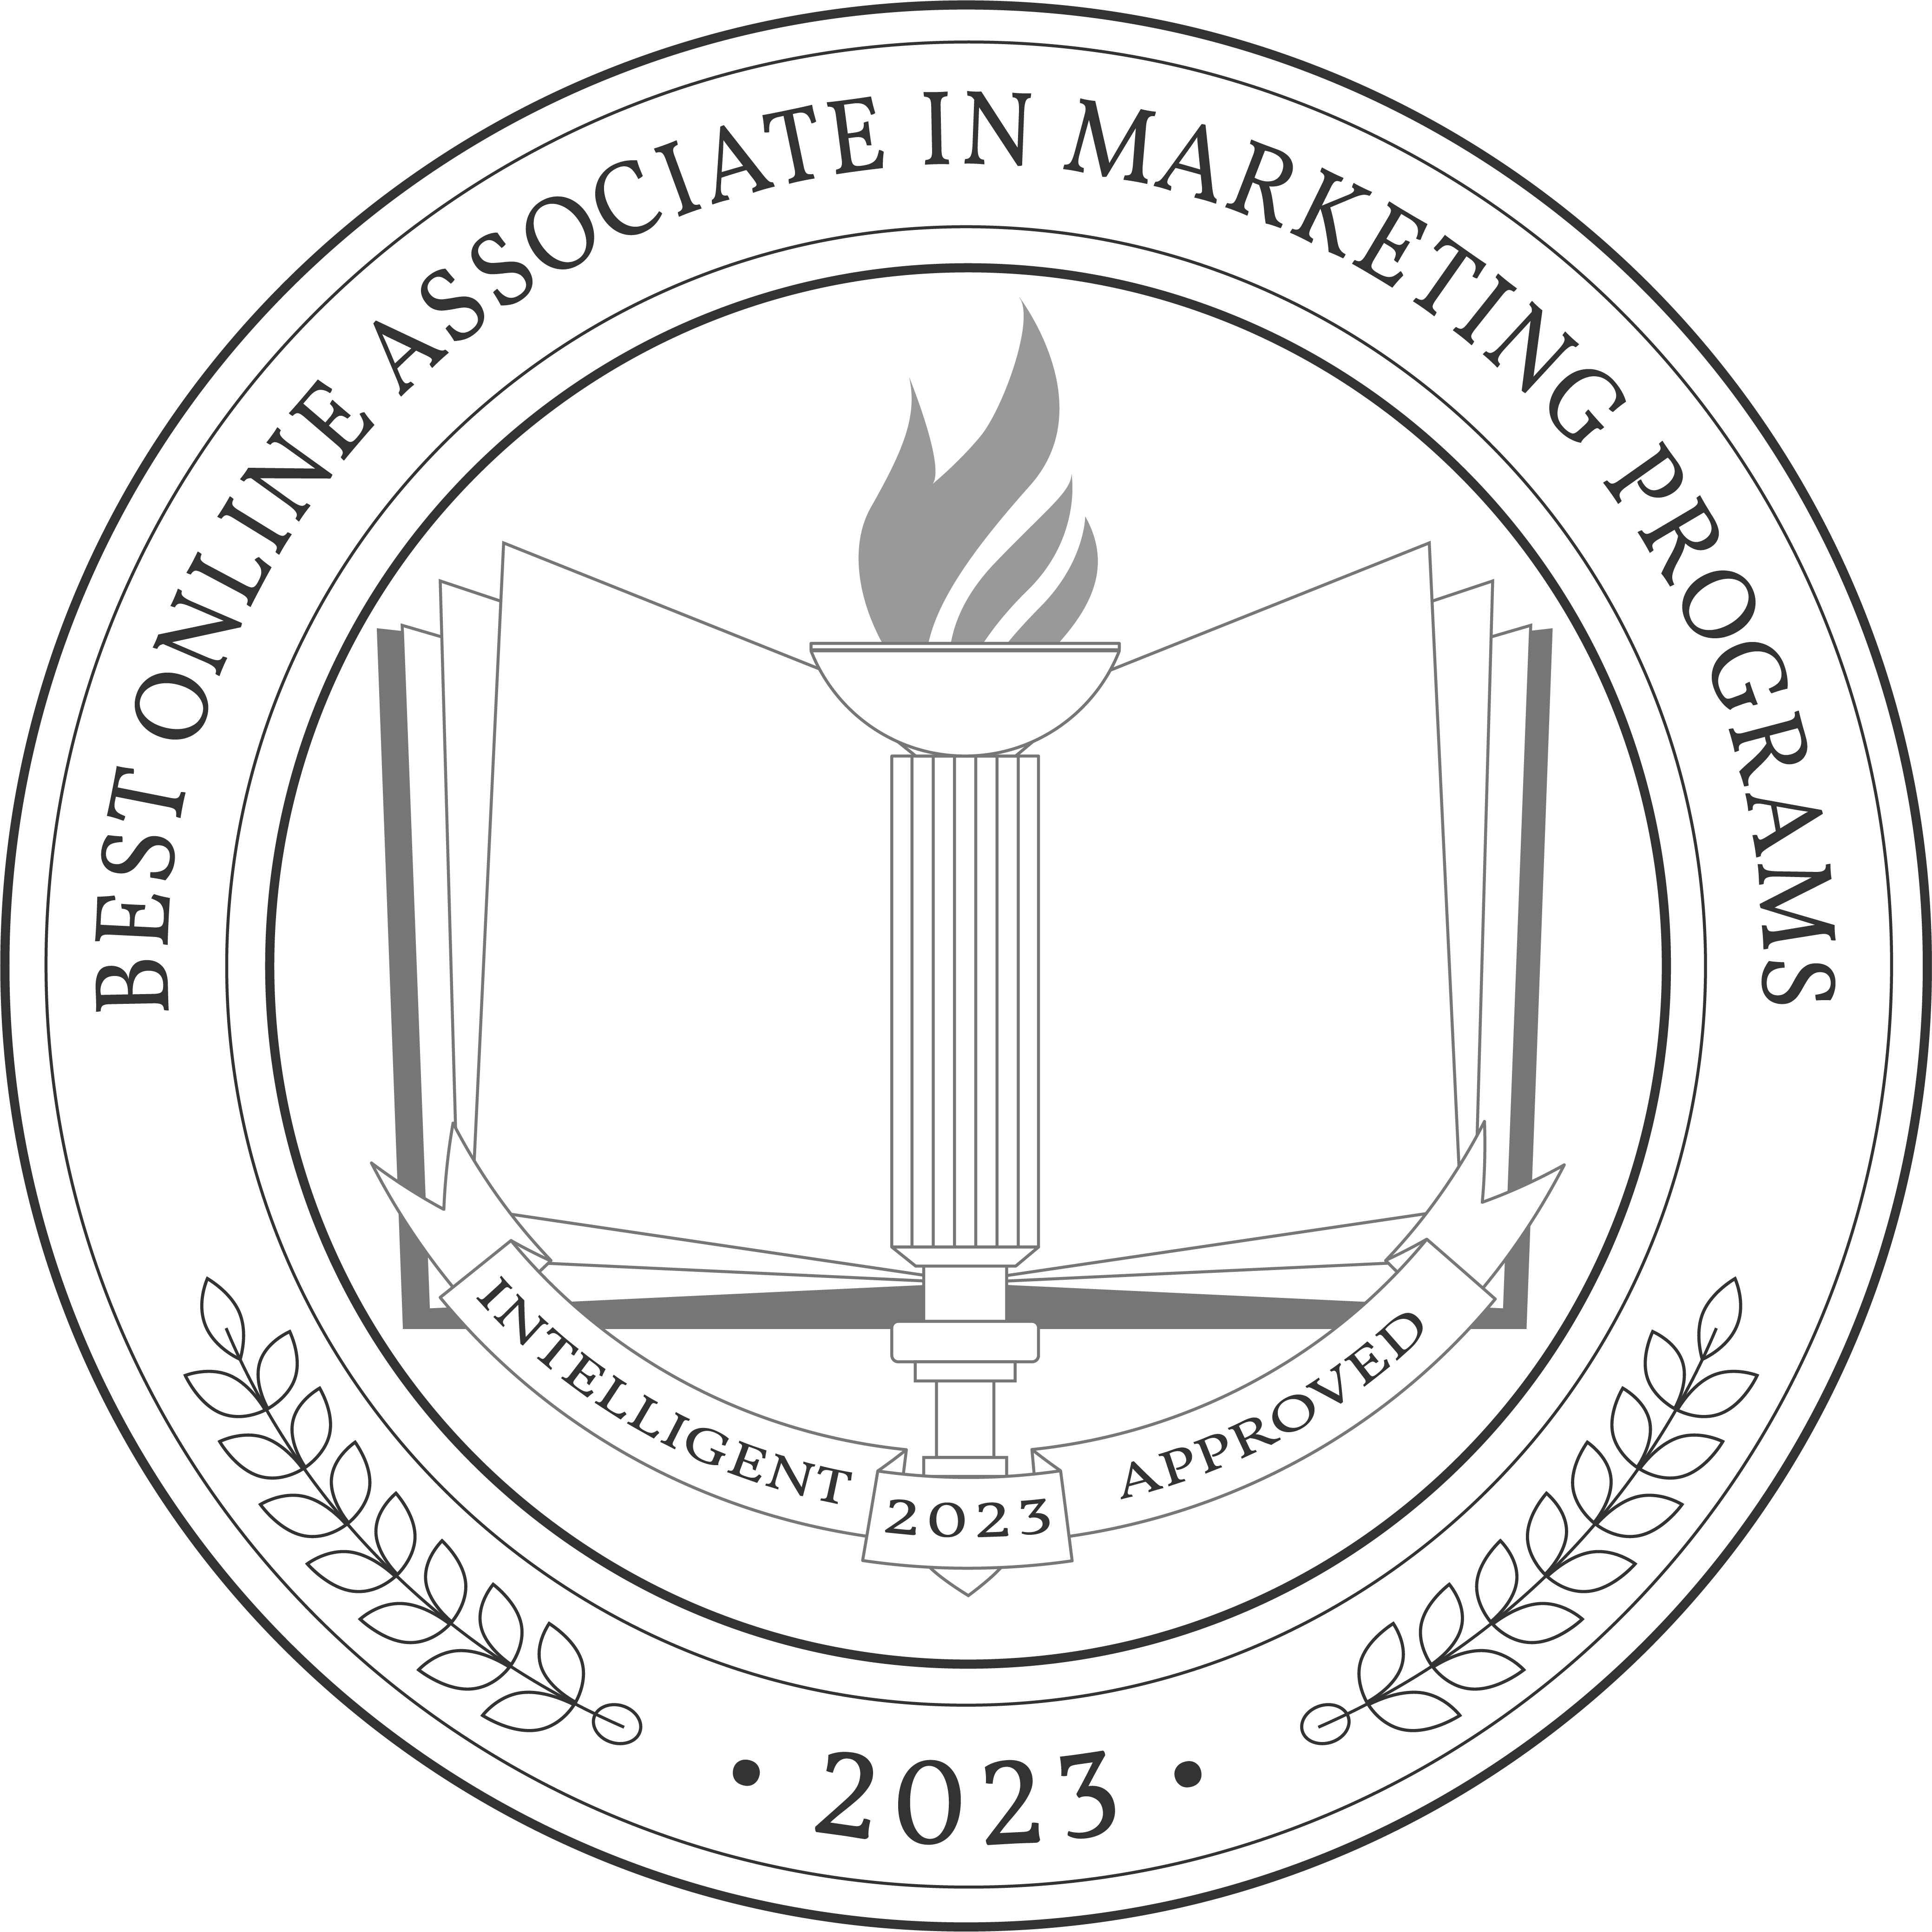 Best Online Associate in Marketing Programs badge